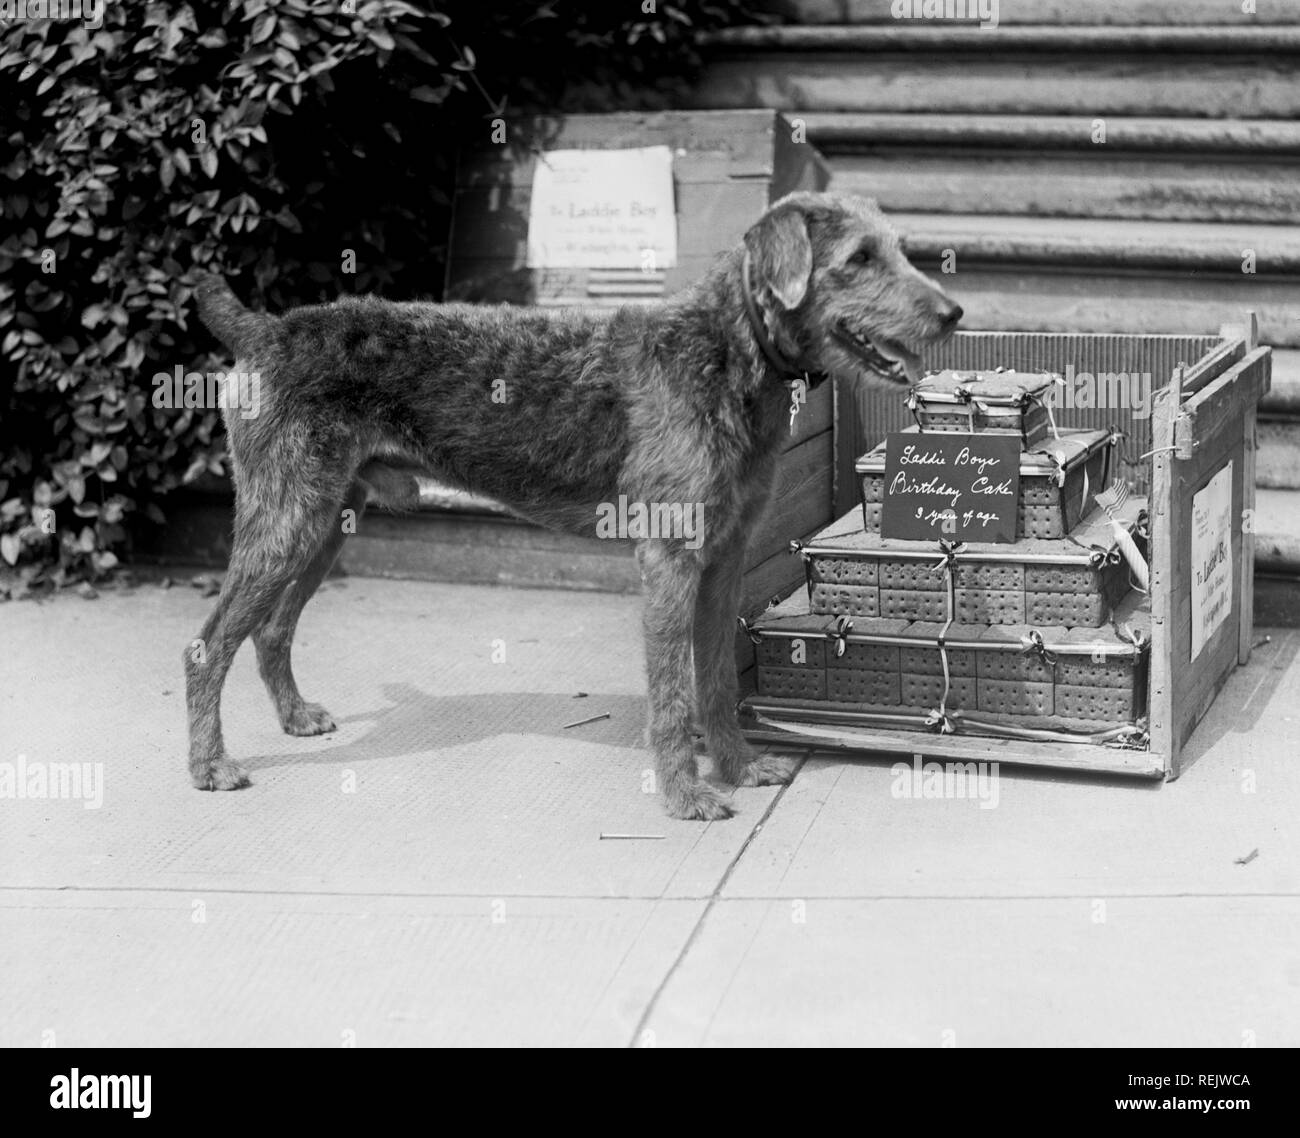 U.S. President Warren G. Harding's Dog, Laddie Boy's Birthday Cake, Washington DC, USA, National Photo Company, July 25, 1923 Stock Photo